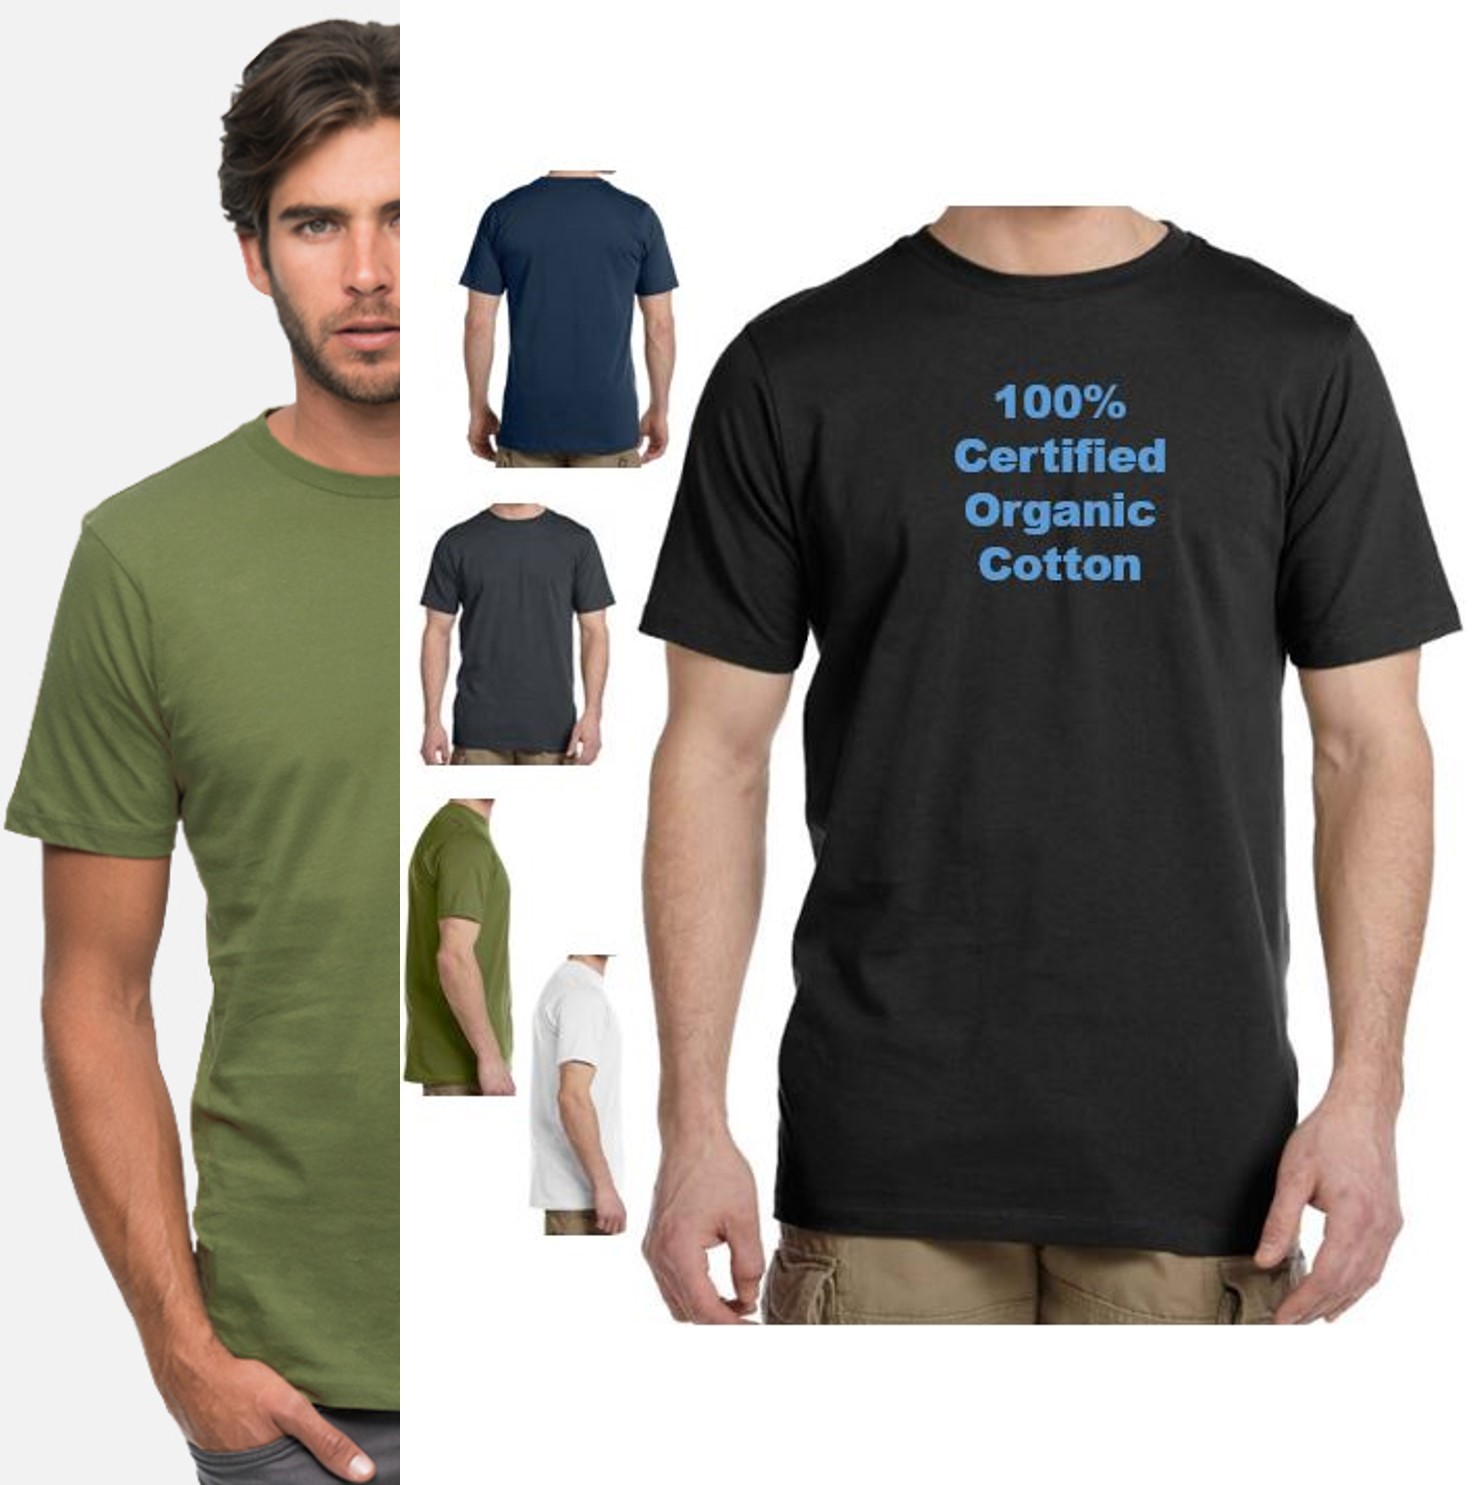 Unisex organic cotton short sleeve fashion tee shirt branded